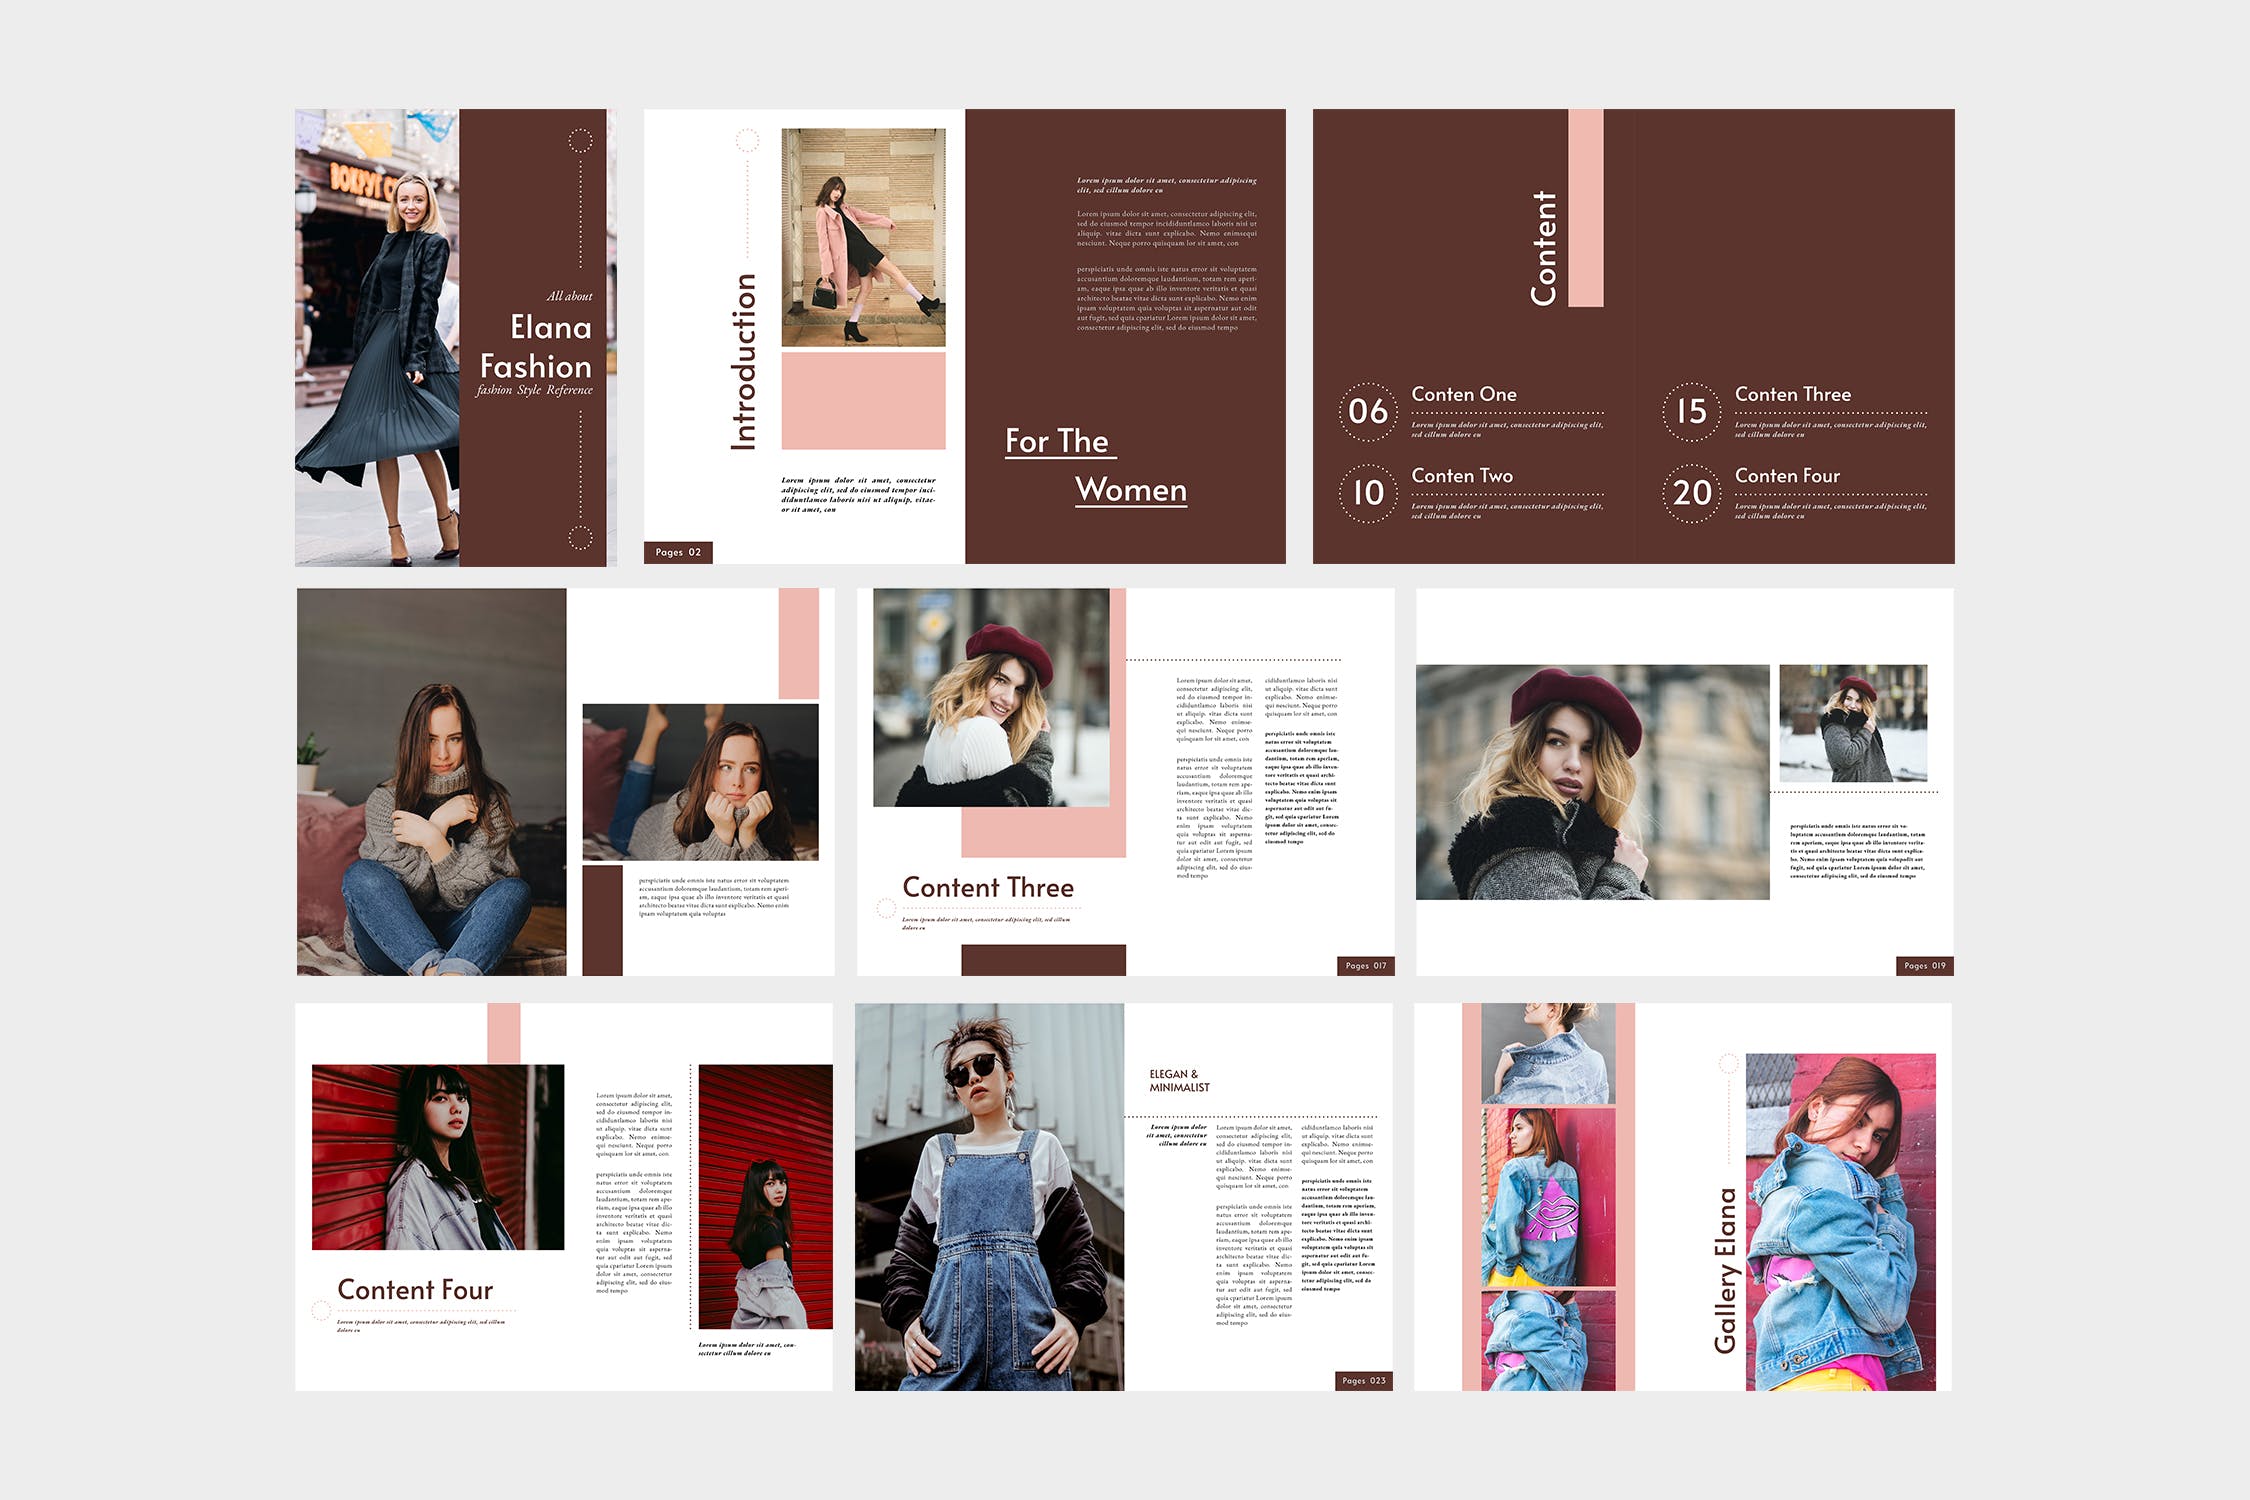 时装产品素材库精选目录设计模板 Elana Fashion Lookbook Catalogue插图(4)